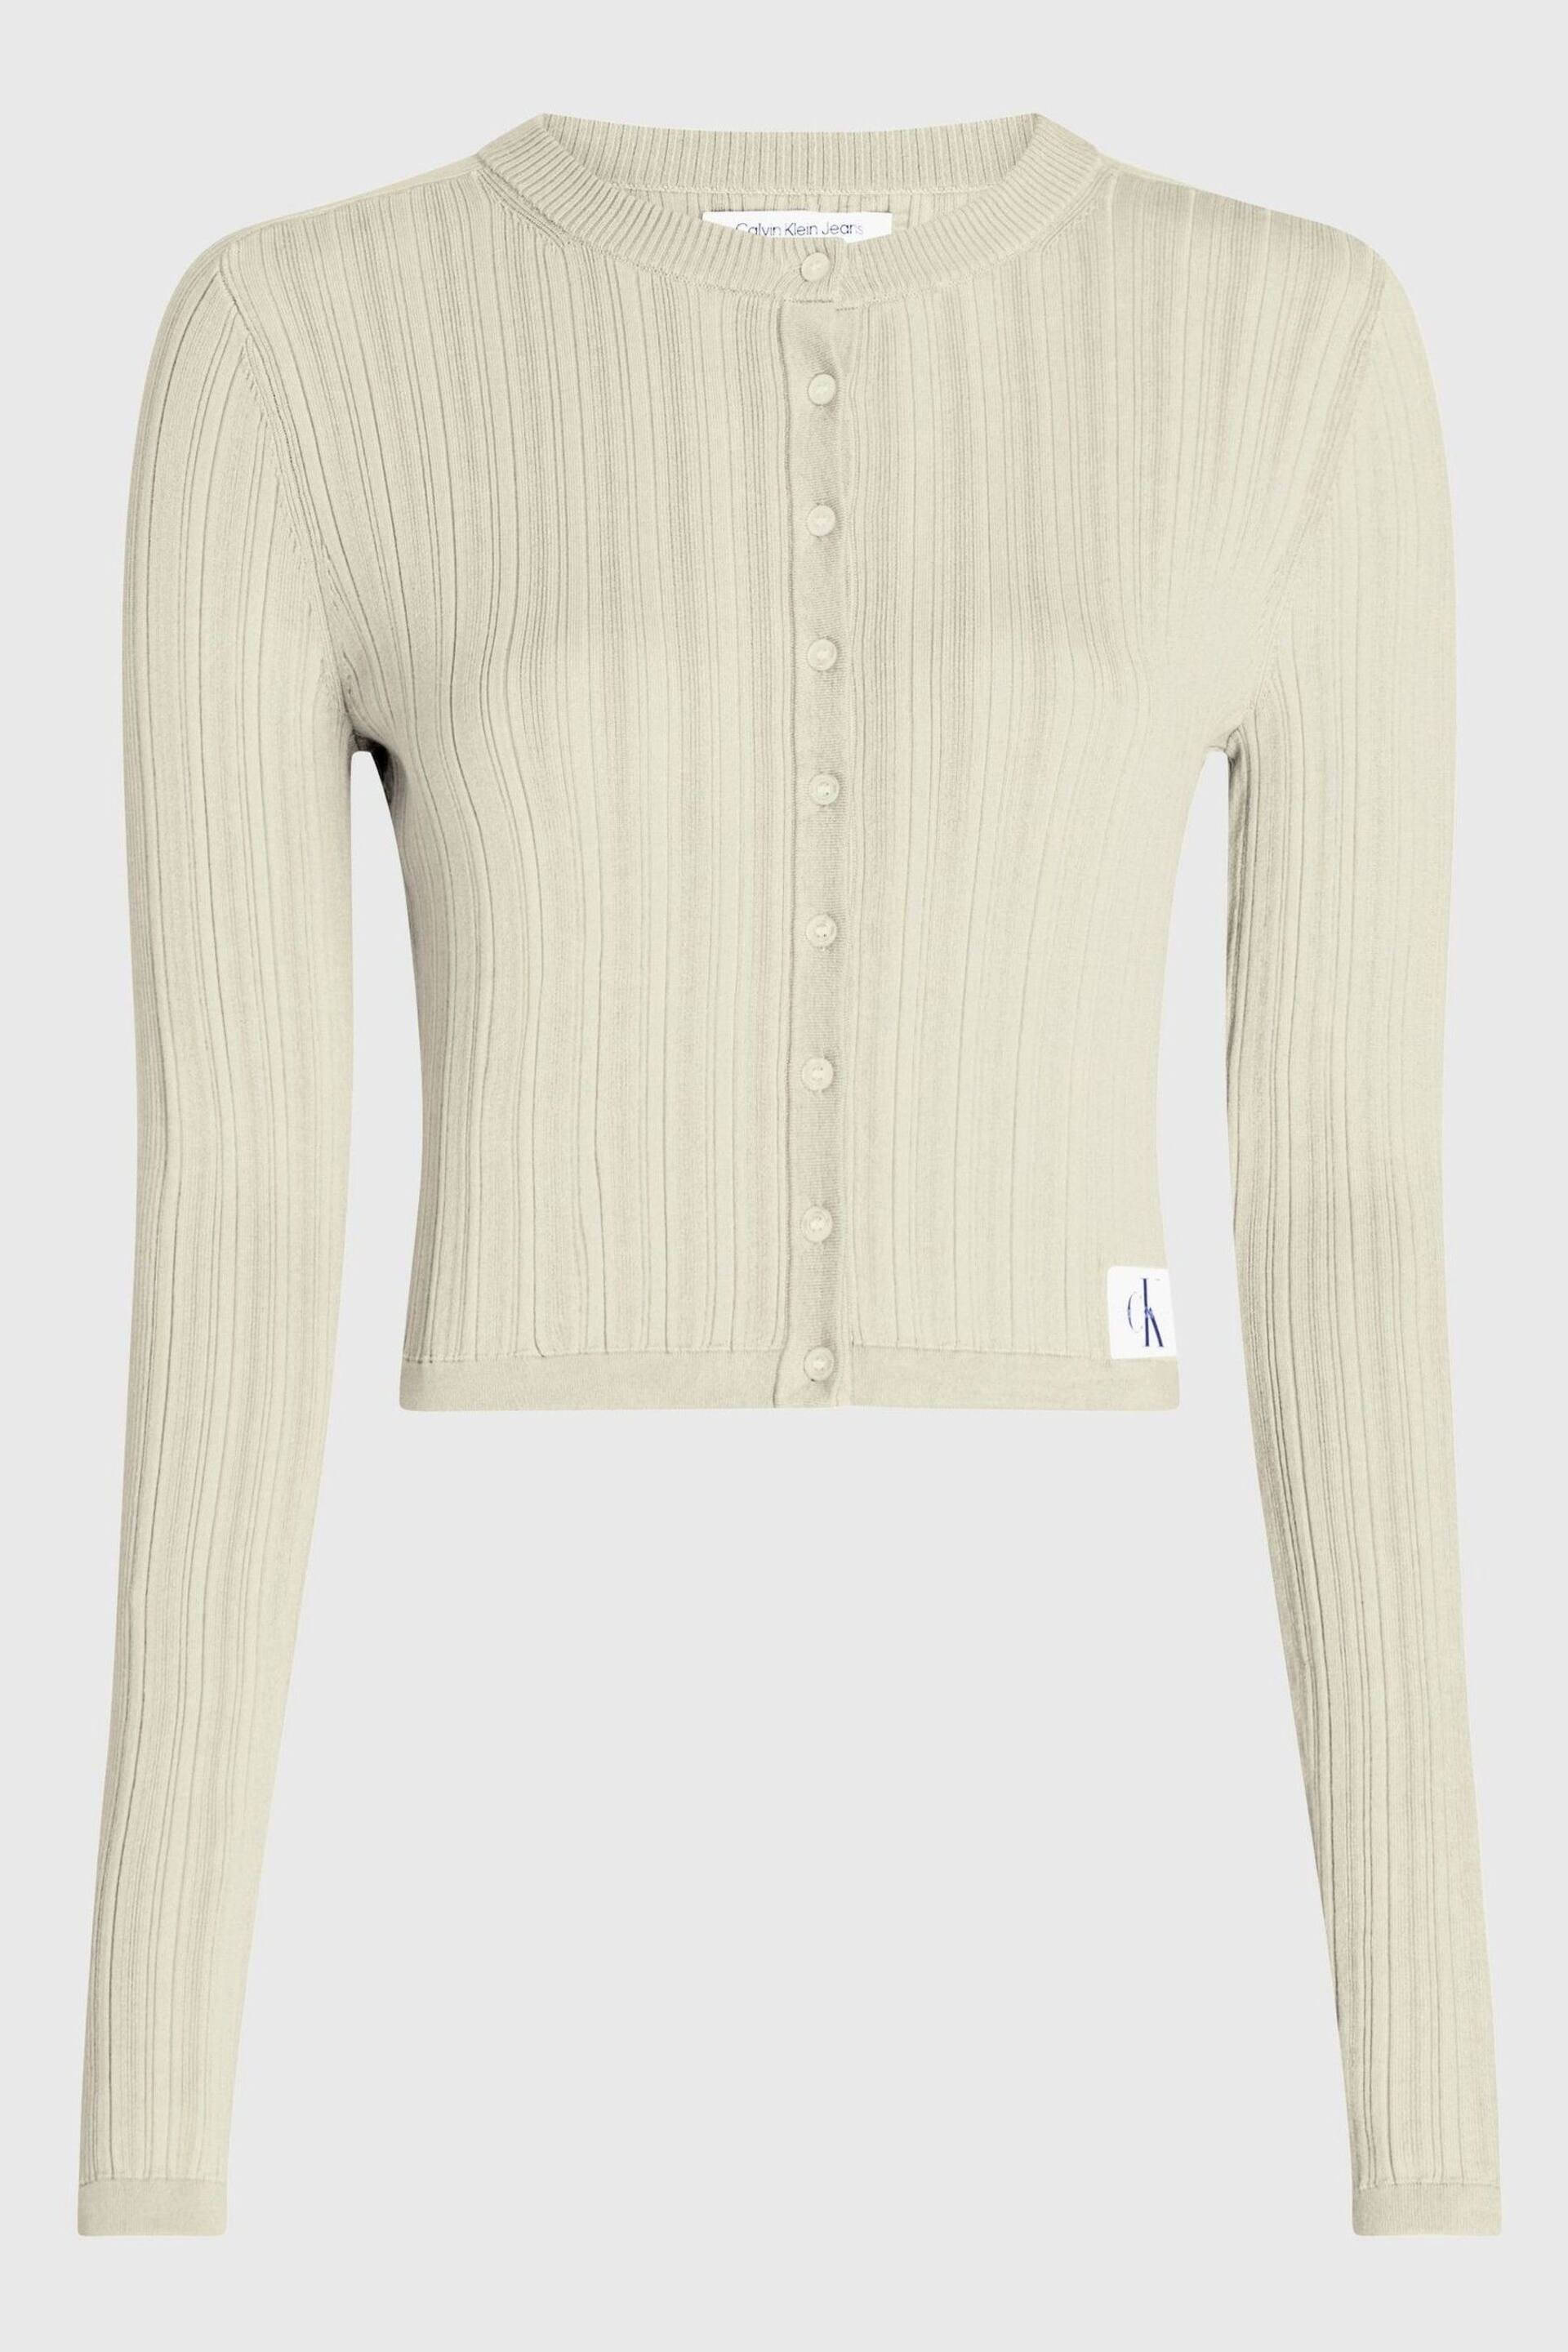 Calvin Klein Green Label Sweater Cardigan - Image 4 of 4